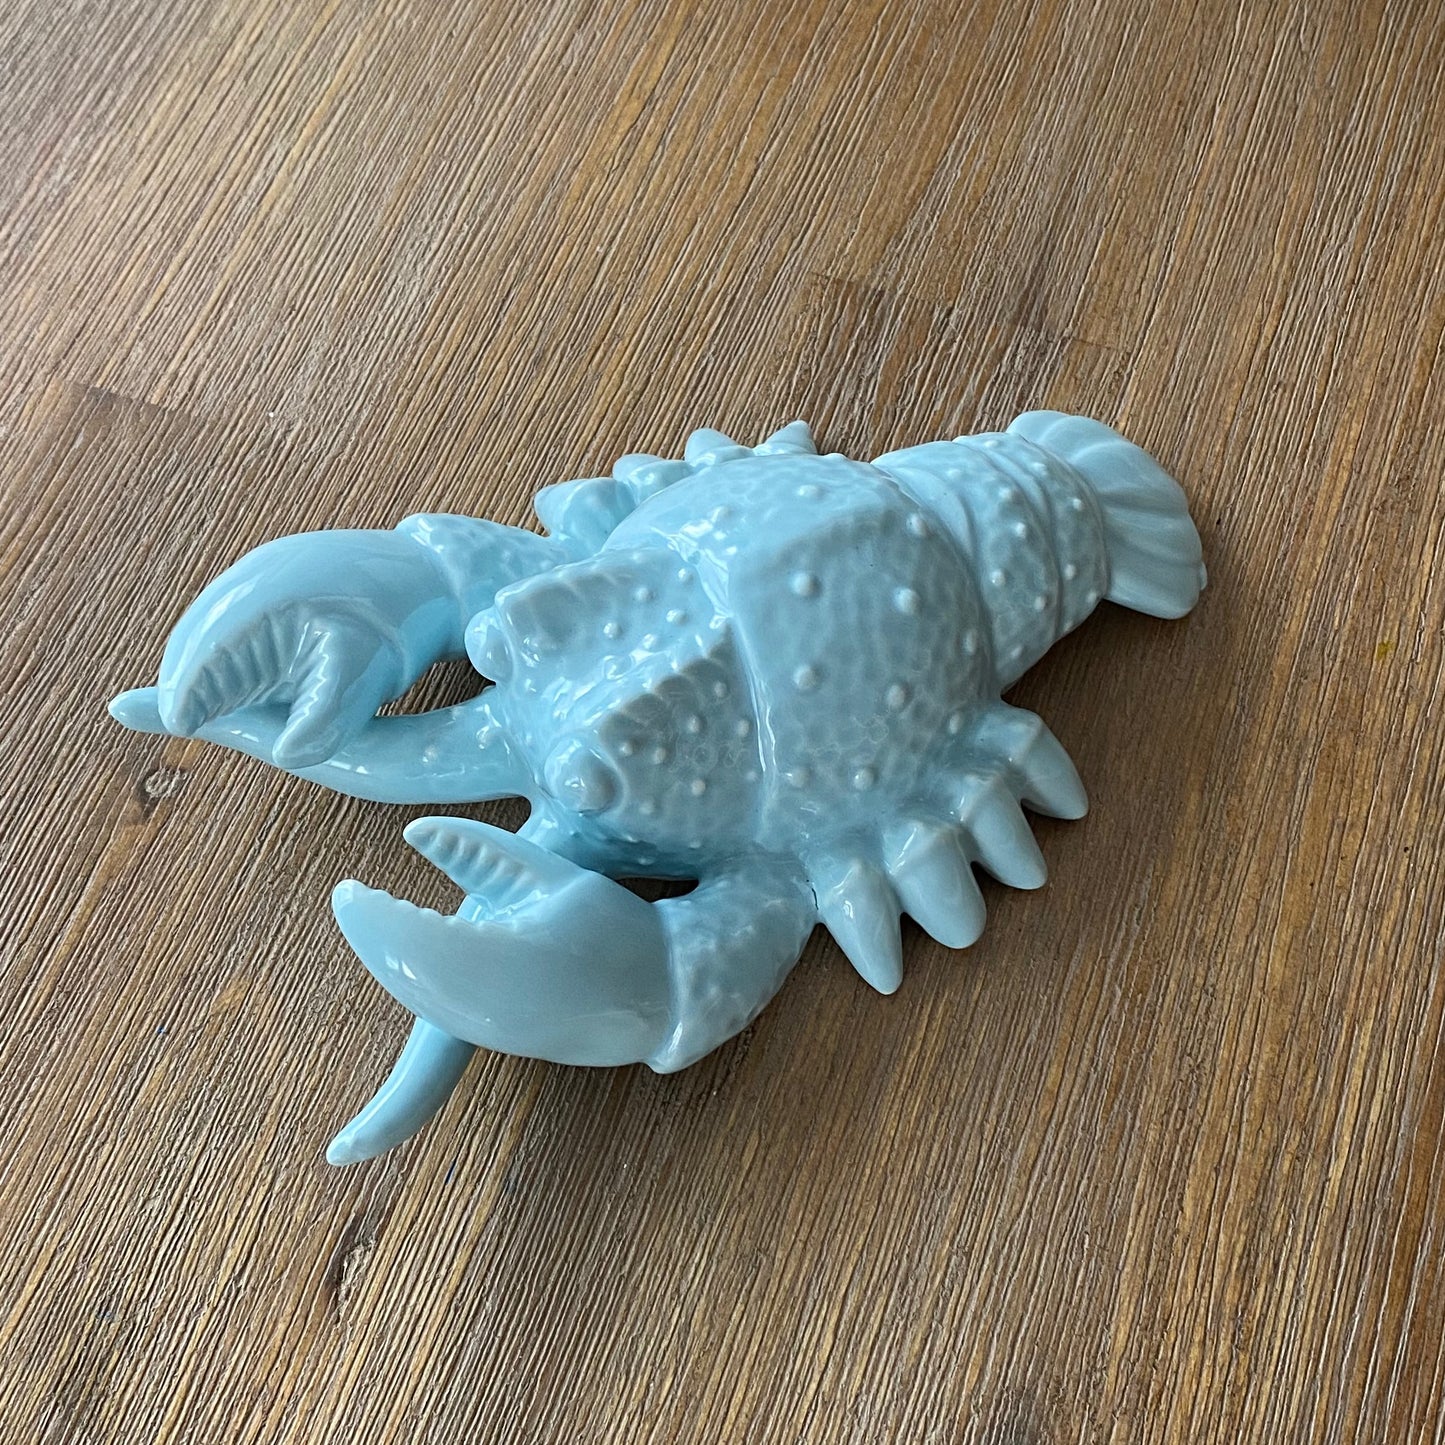 Sea Foam Ceramic Lobster